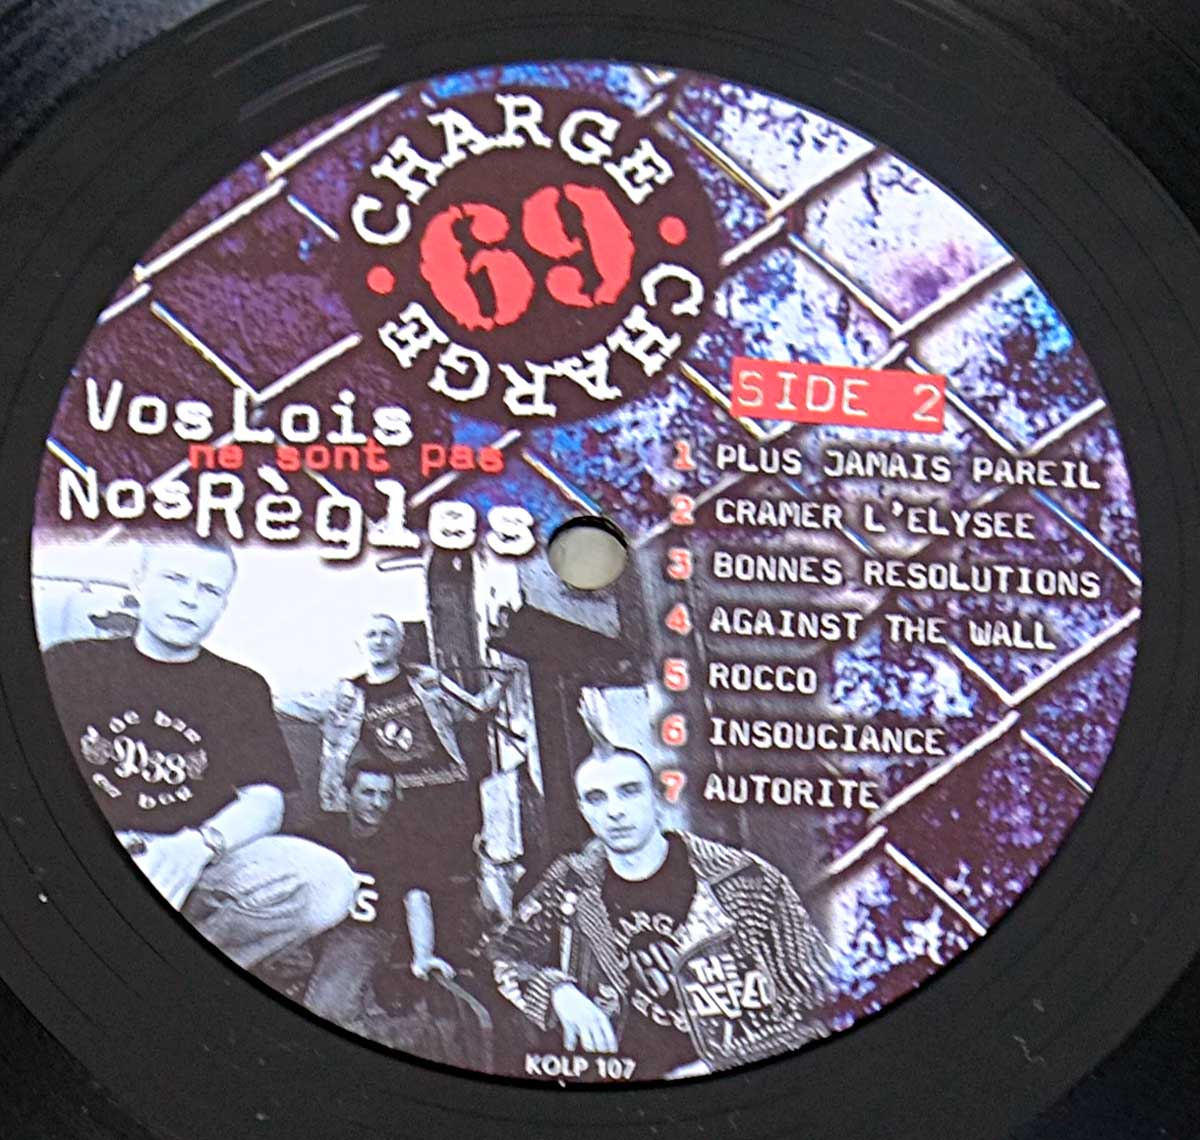 High Quality Photo of Record Label  "CHARGE 69 - Vos Lois Ne Sont Pas Nos Regles